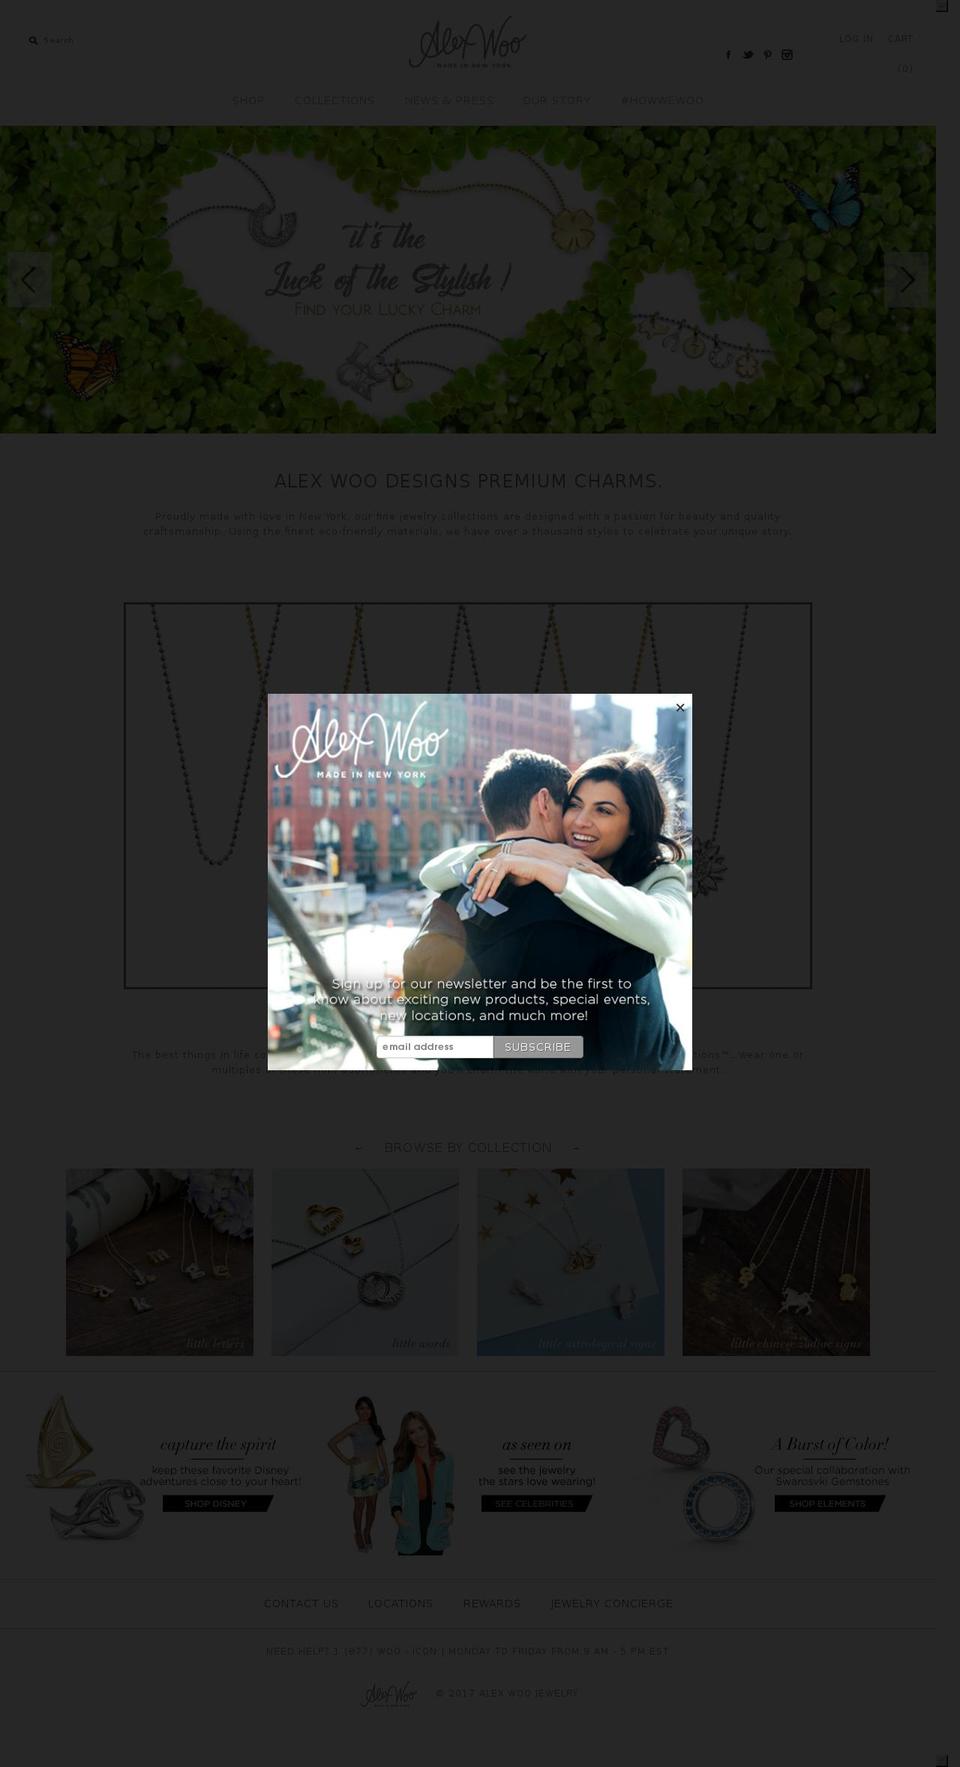 alexwoo.com shopify website screenshot